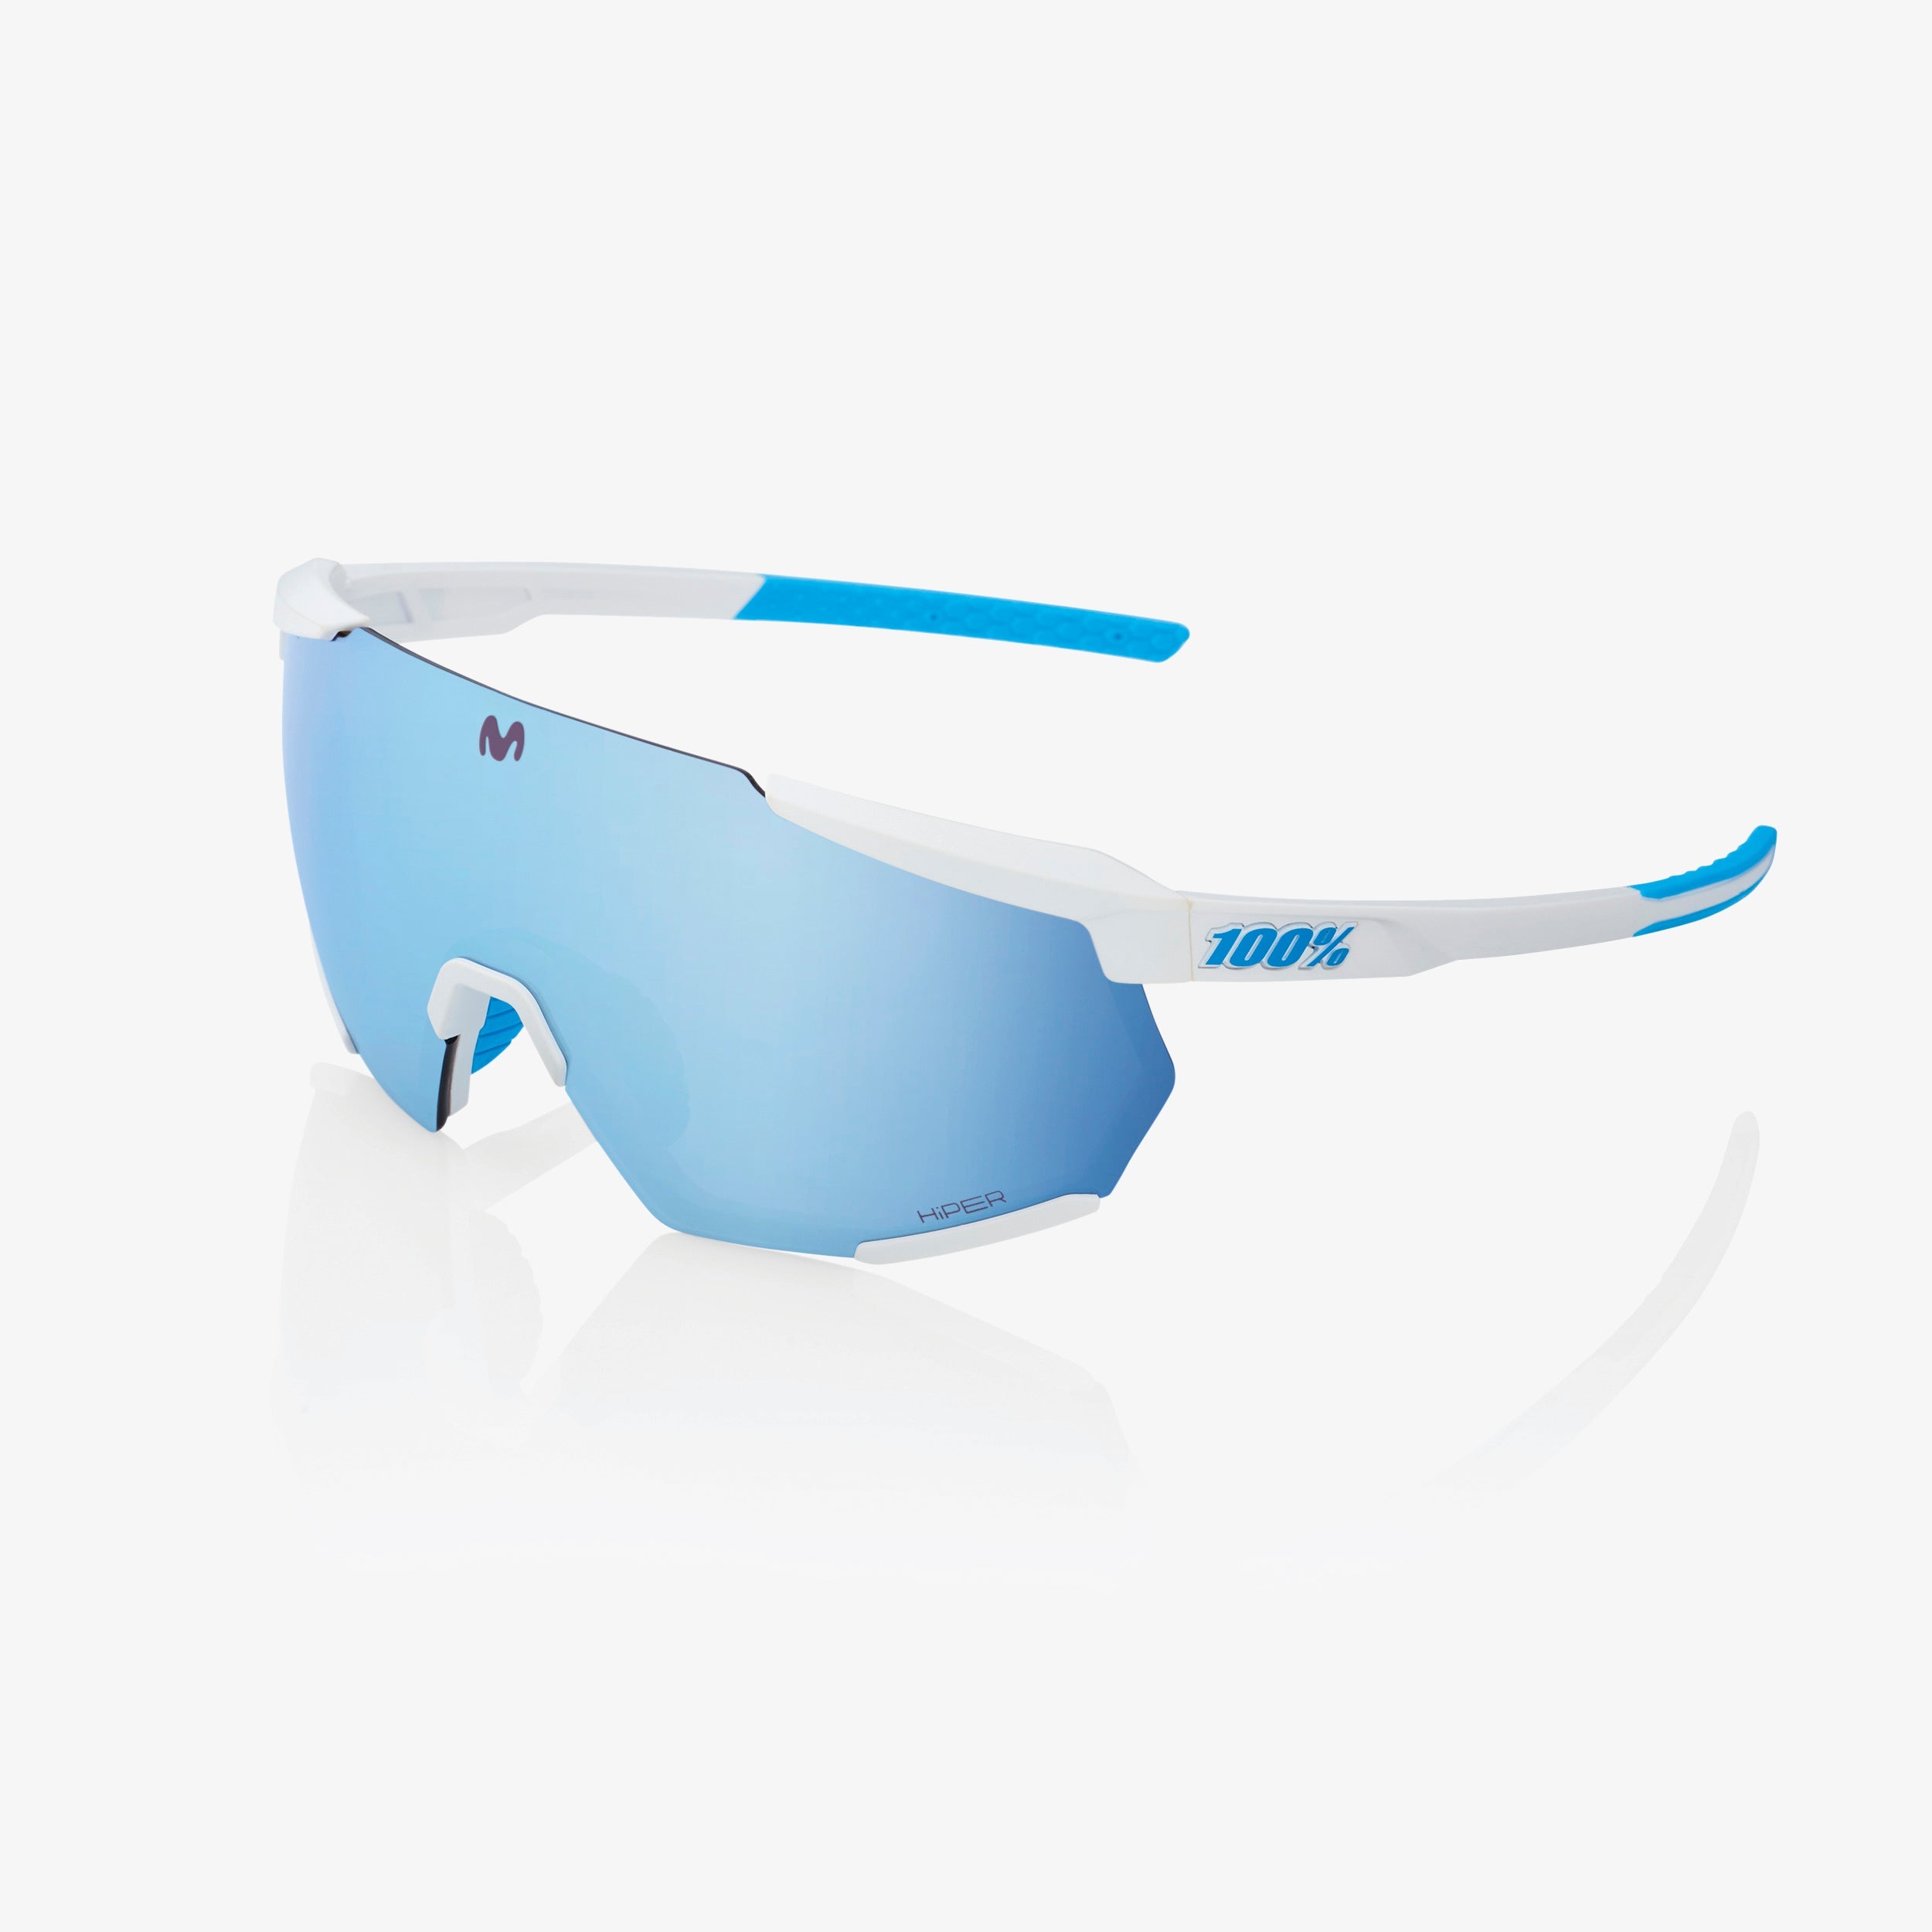 Racetrap Sports Performance Sunglasses – 100% Europe